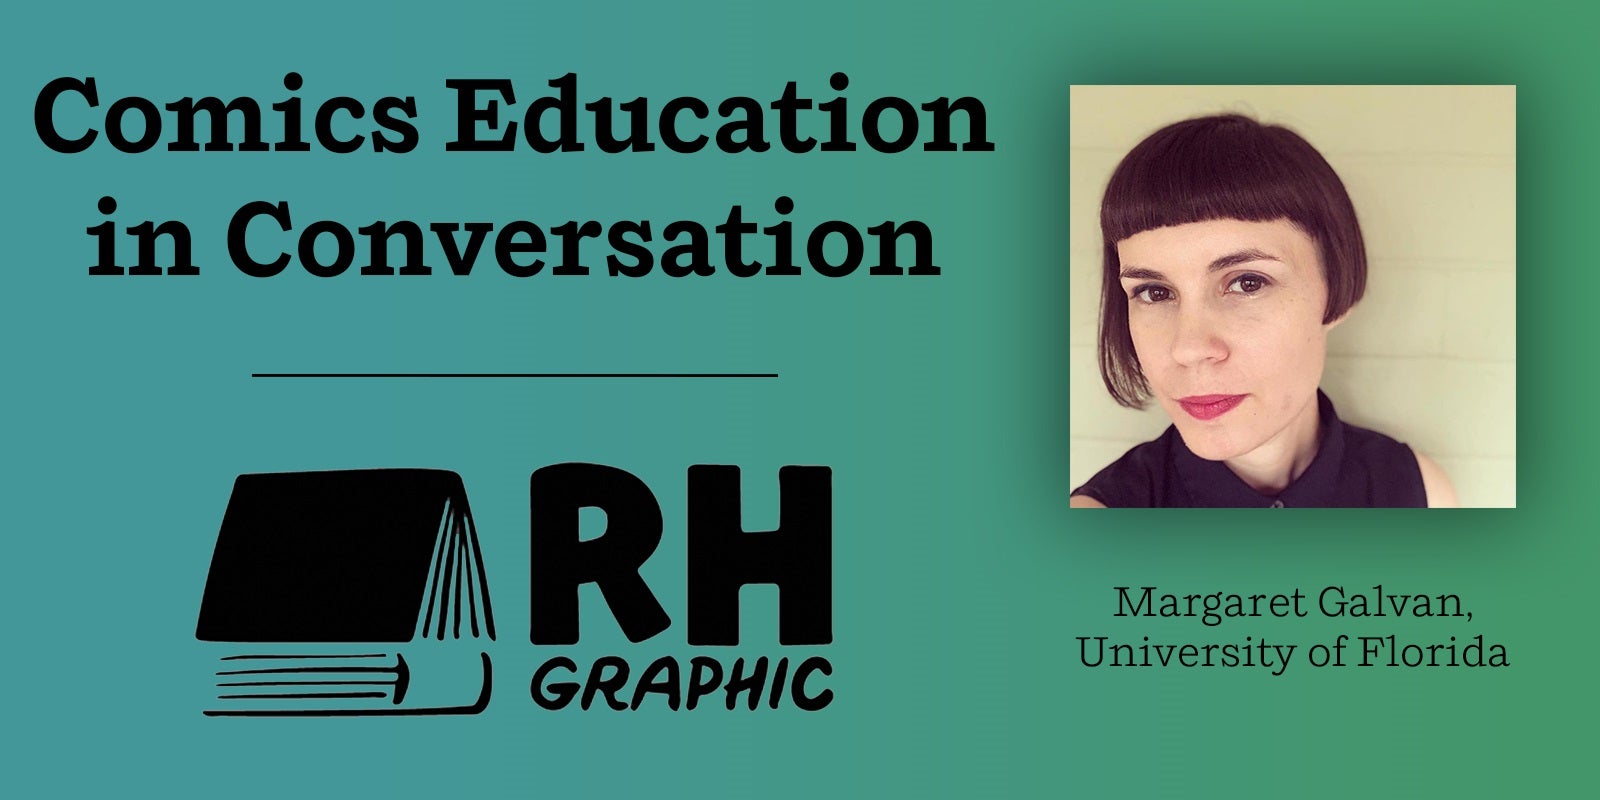 Comics Education in Conversation: Margaret Galvan